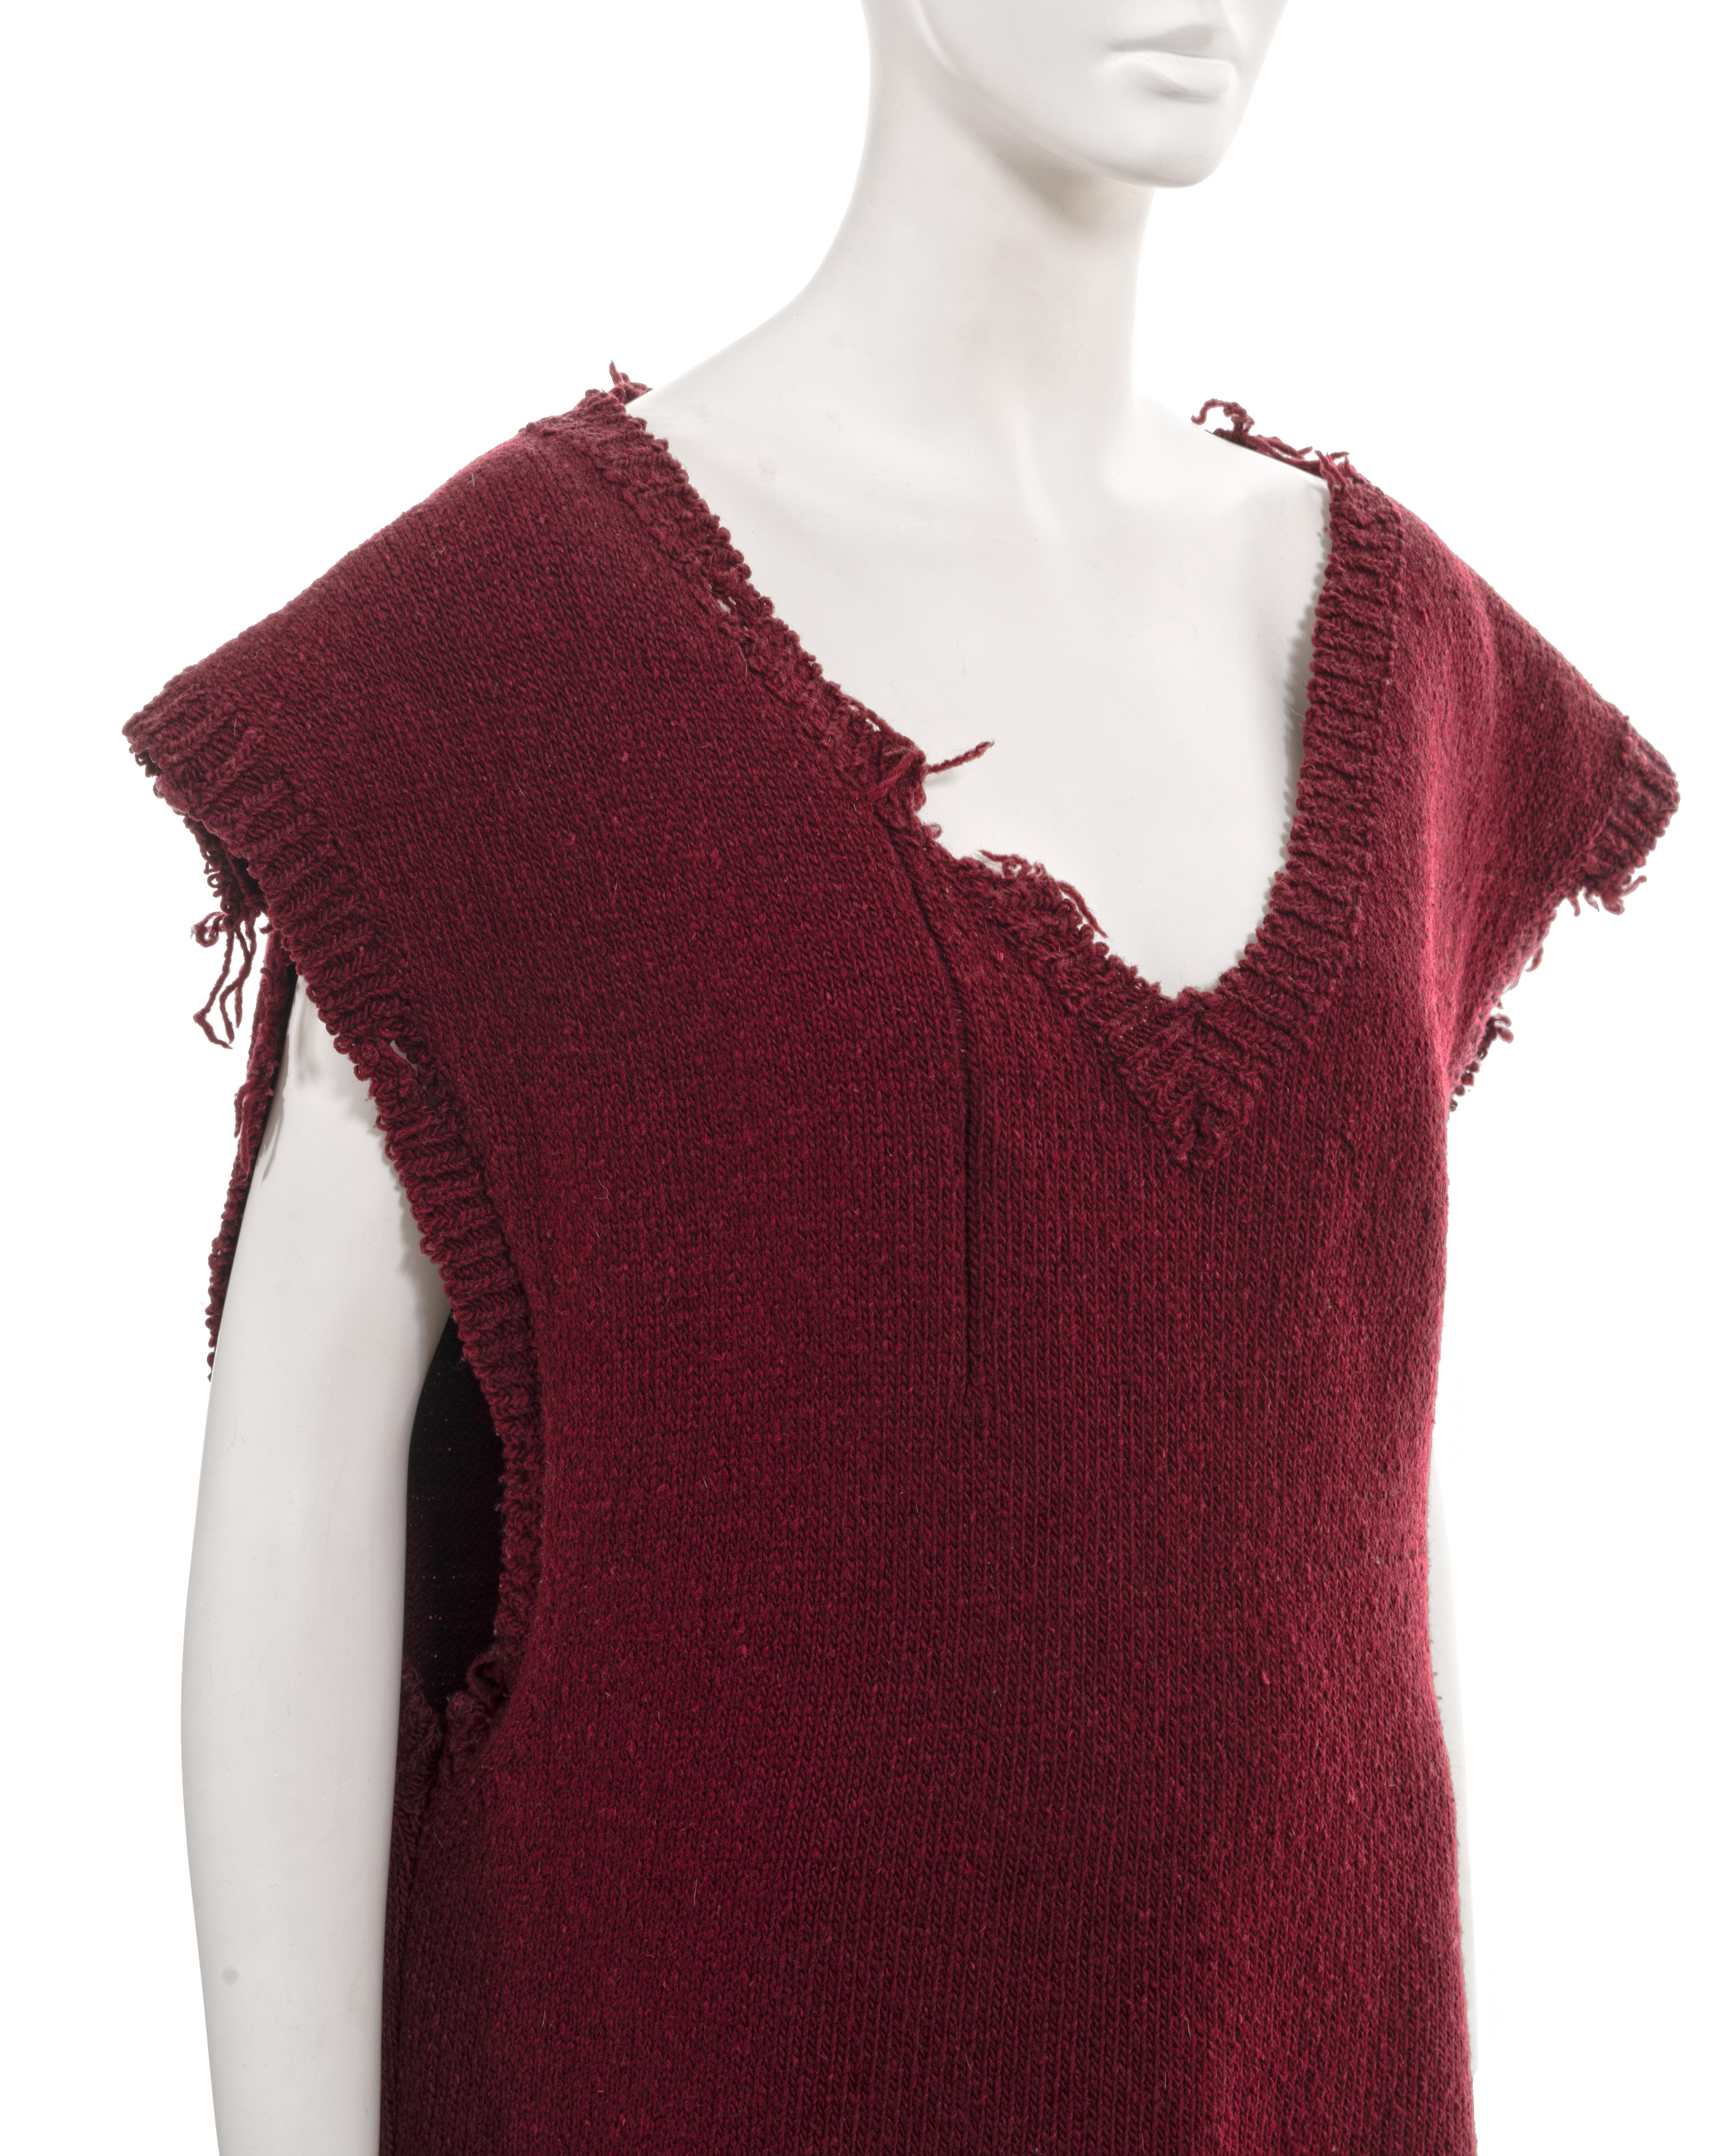 Martin Margiela oversized destroyed burgundy knitted sweater vest, fw 2000 For Sale 4